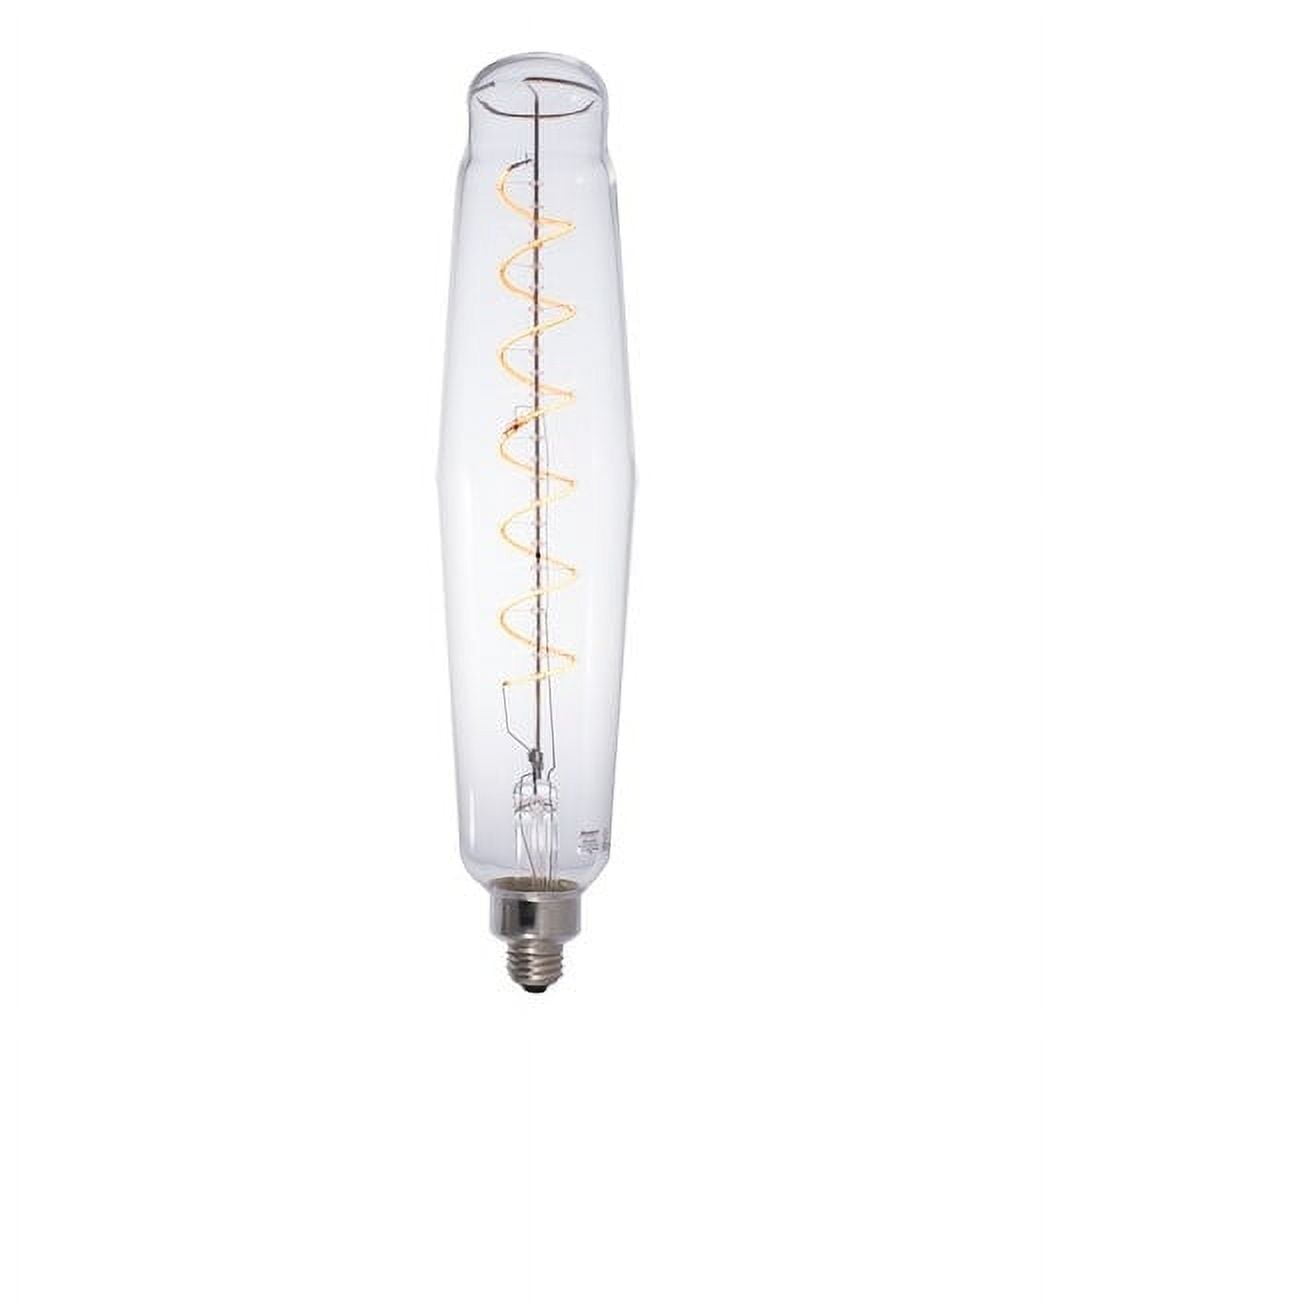 Picture of Bulbrite Grand Nostalgic Collection 4 Watt Dimmable Tubular Shape Oversized Decorative LED Light Bulb with Medium (E26) Base  2200K Amber Light  200 Lumens  Clear Glass